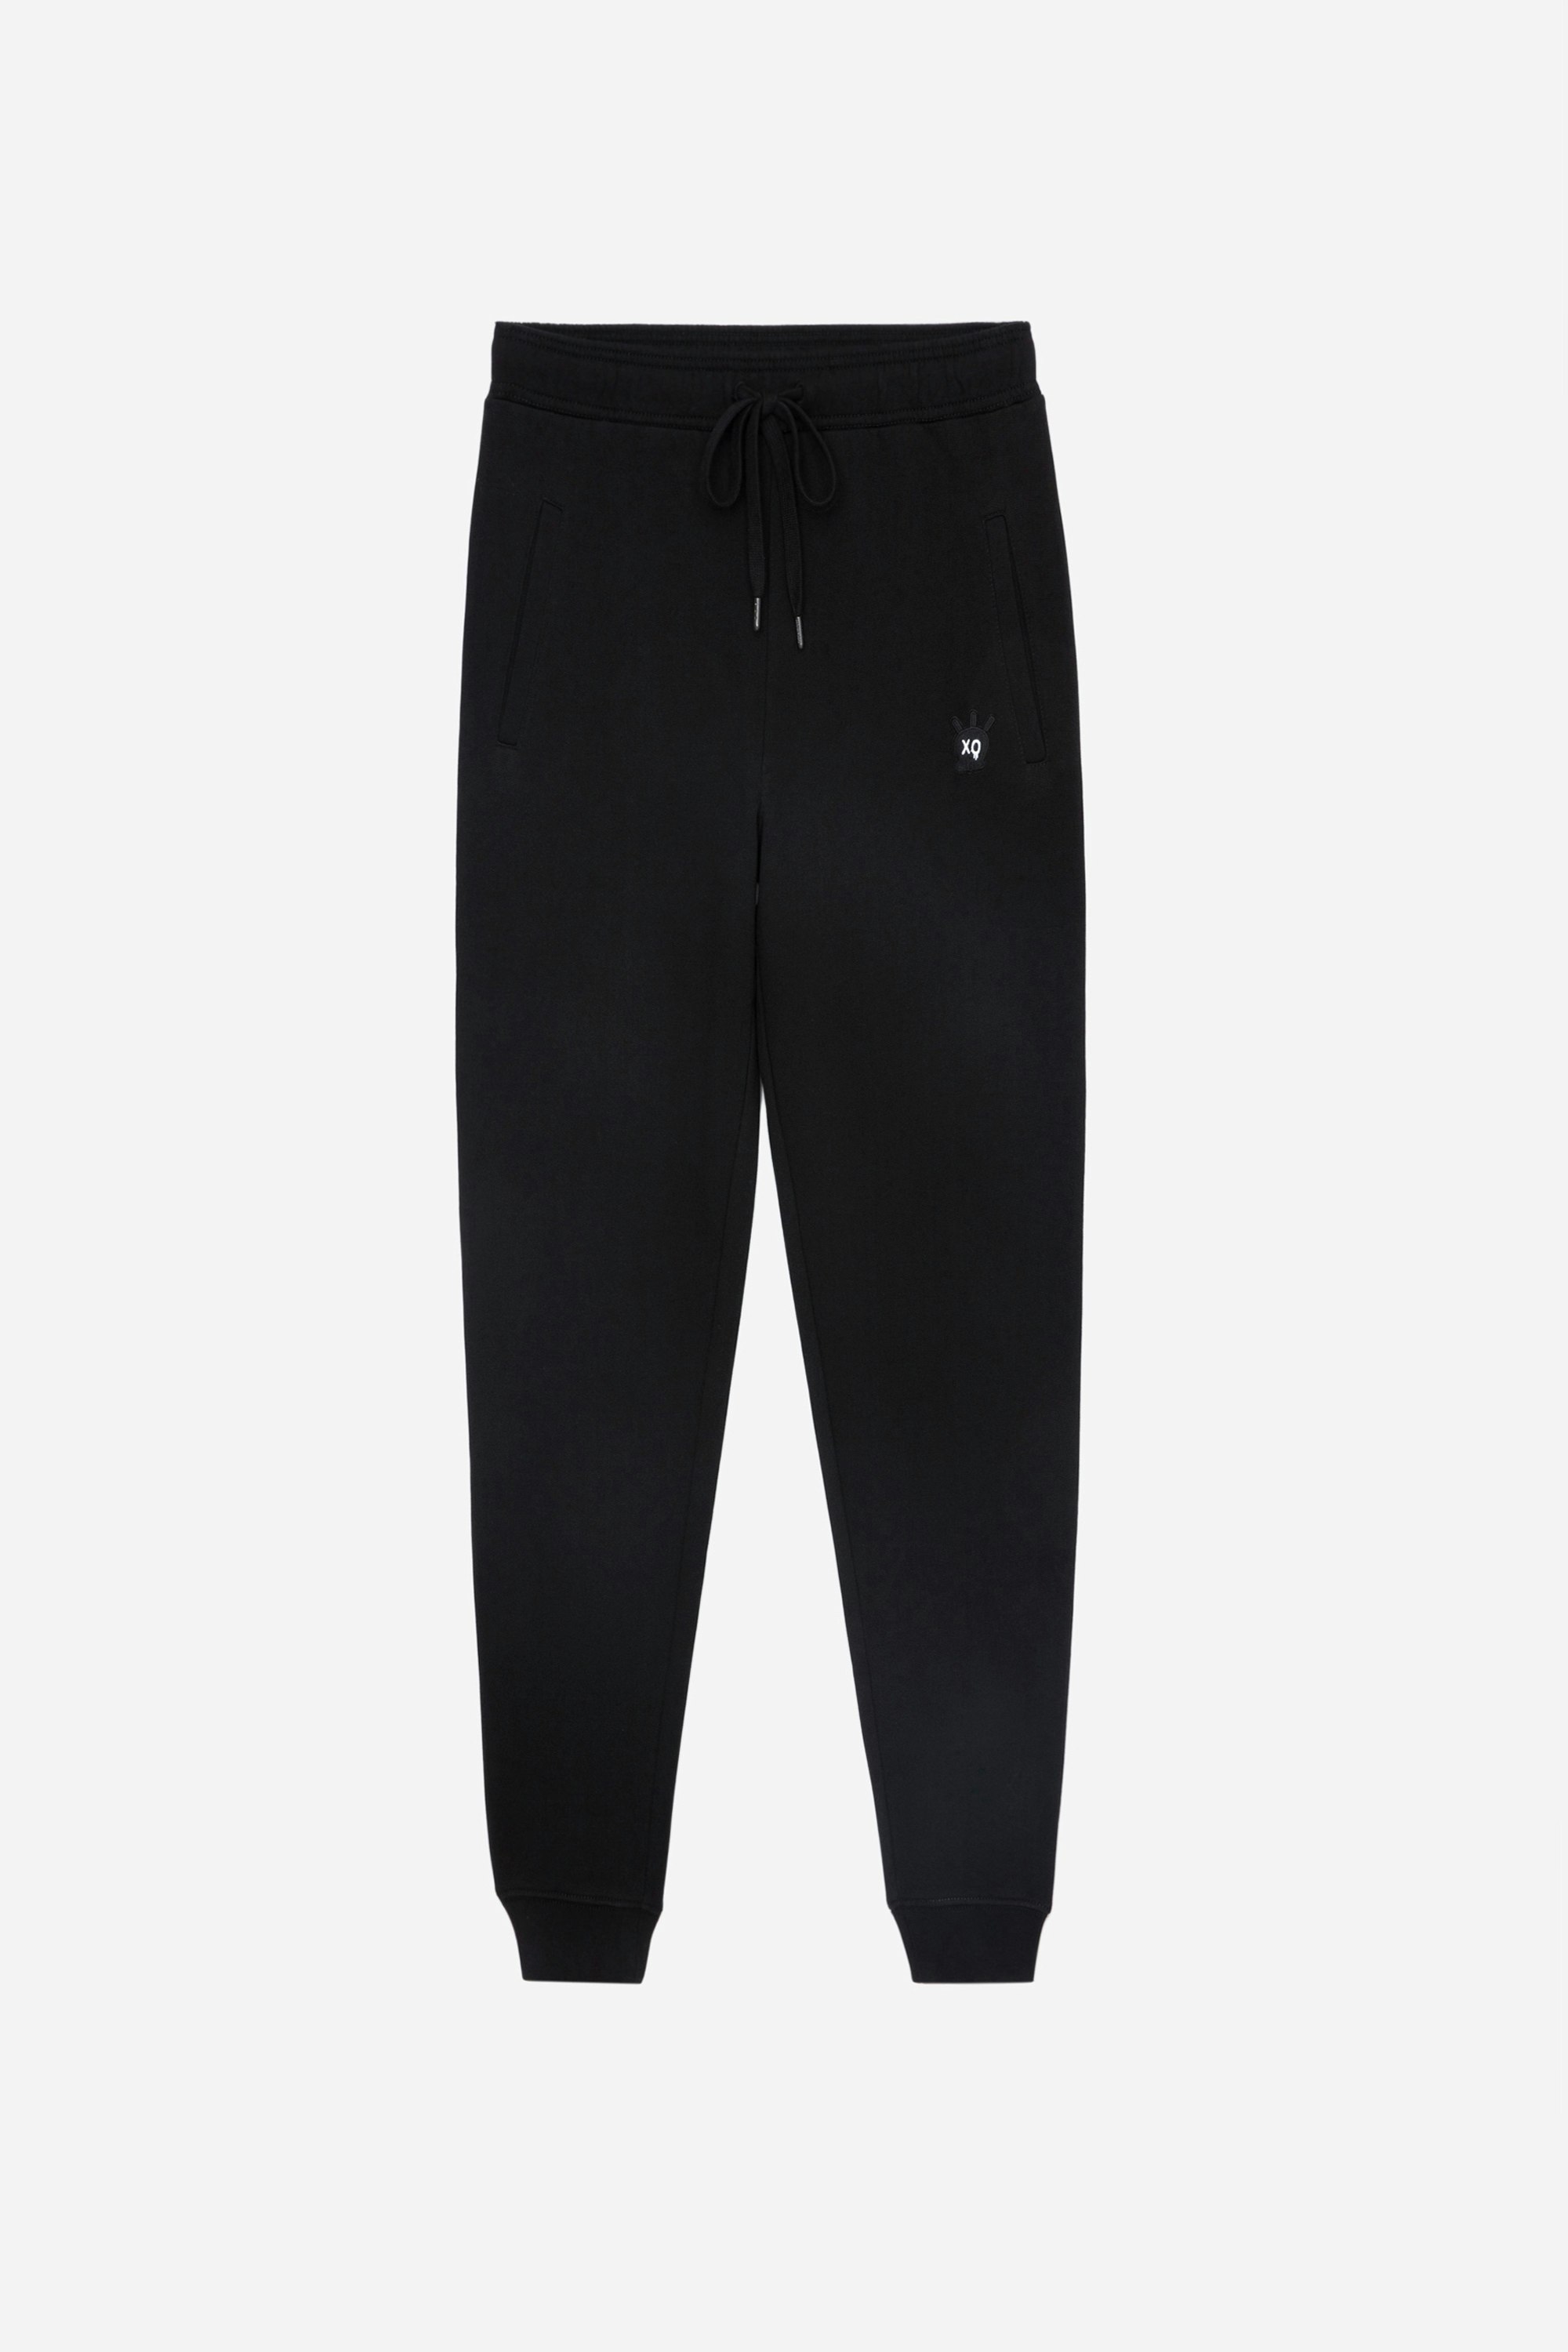 Skull Capri Jogging Bottoms - Men’s black cotton fleece jogging bottoms featuring a Skull XO patch.